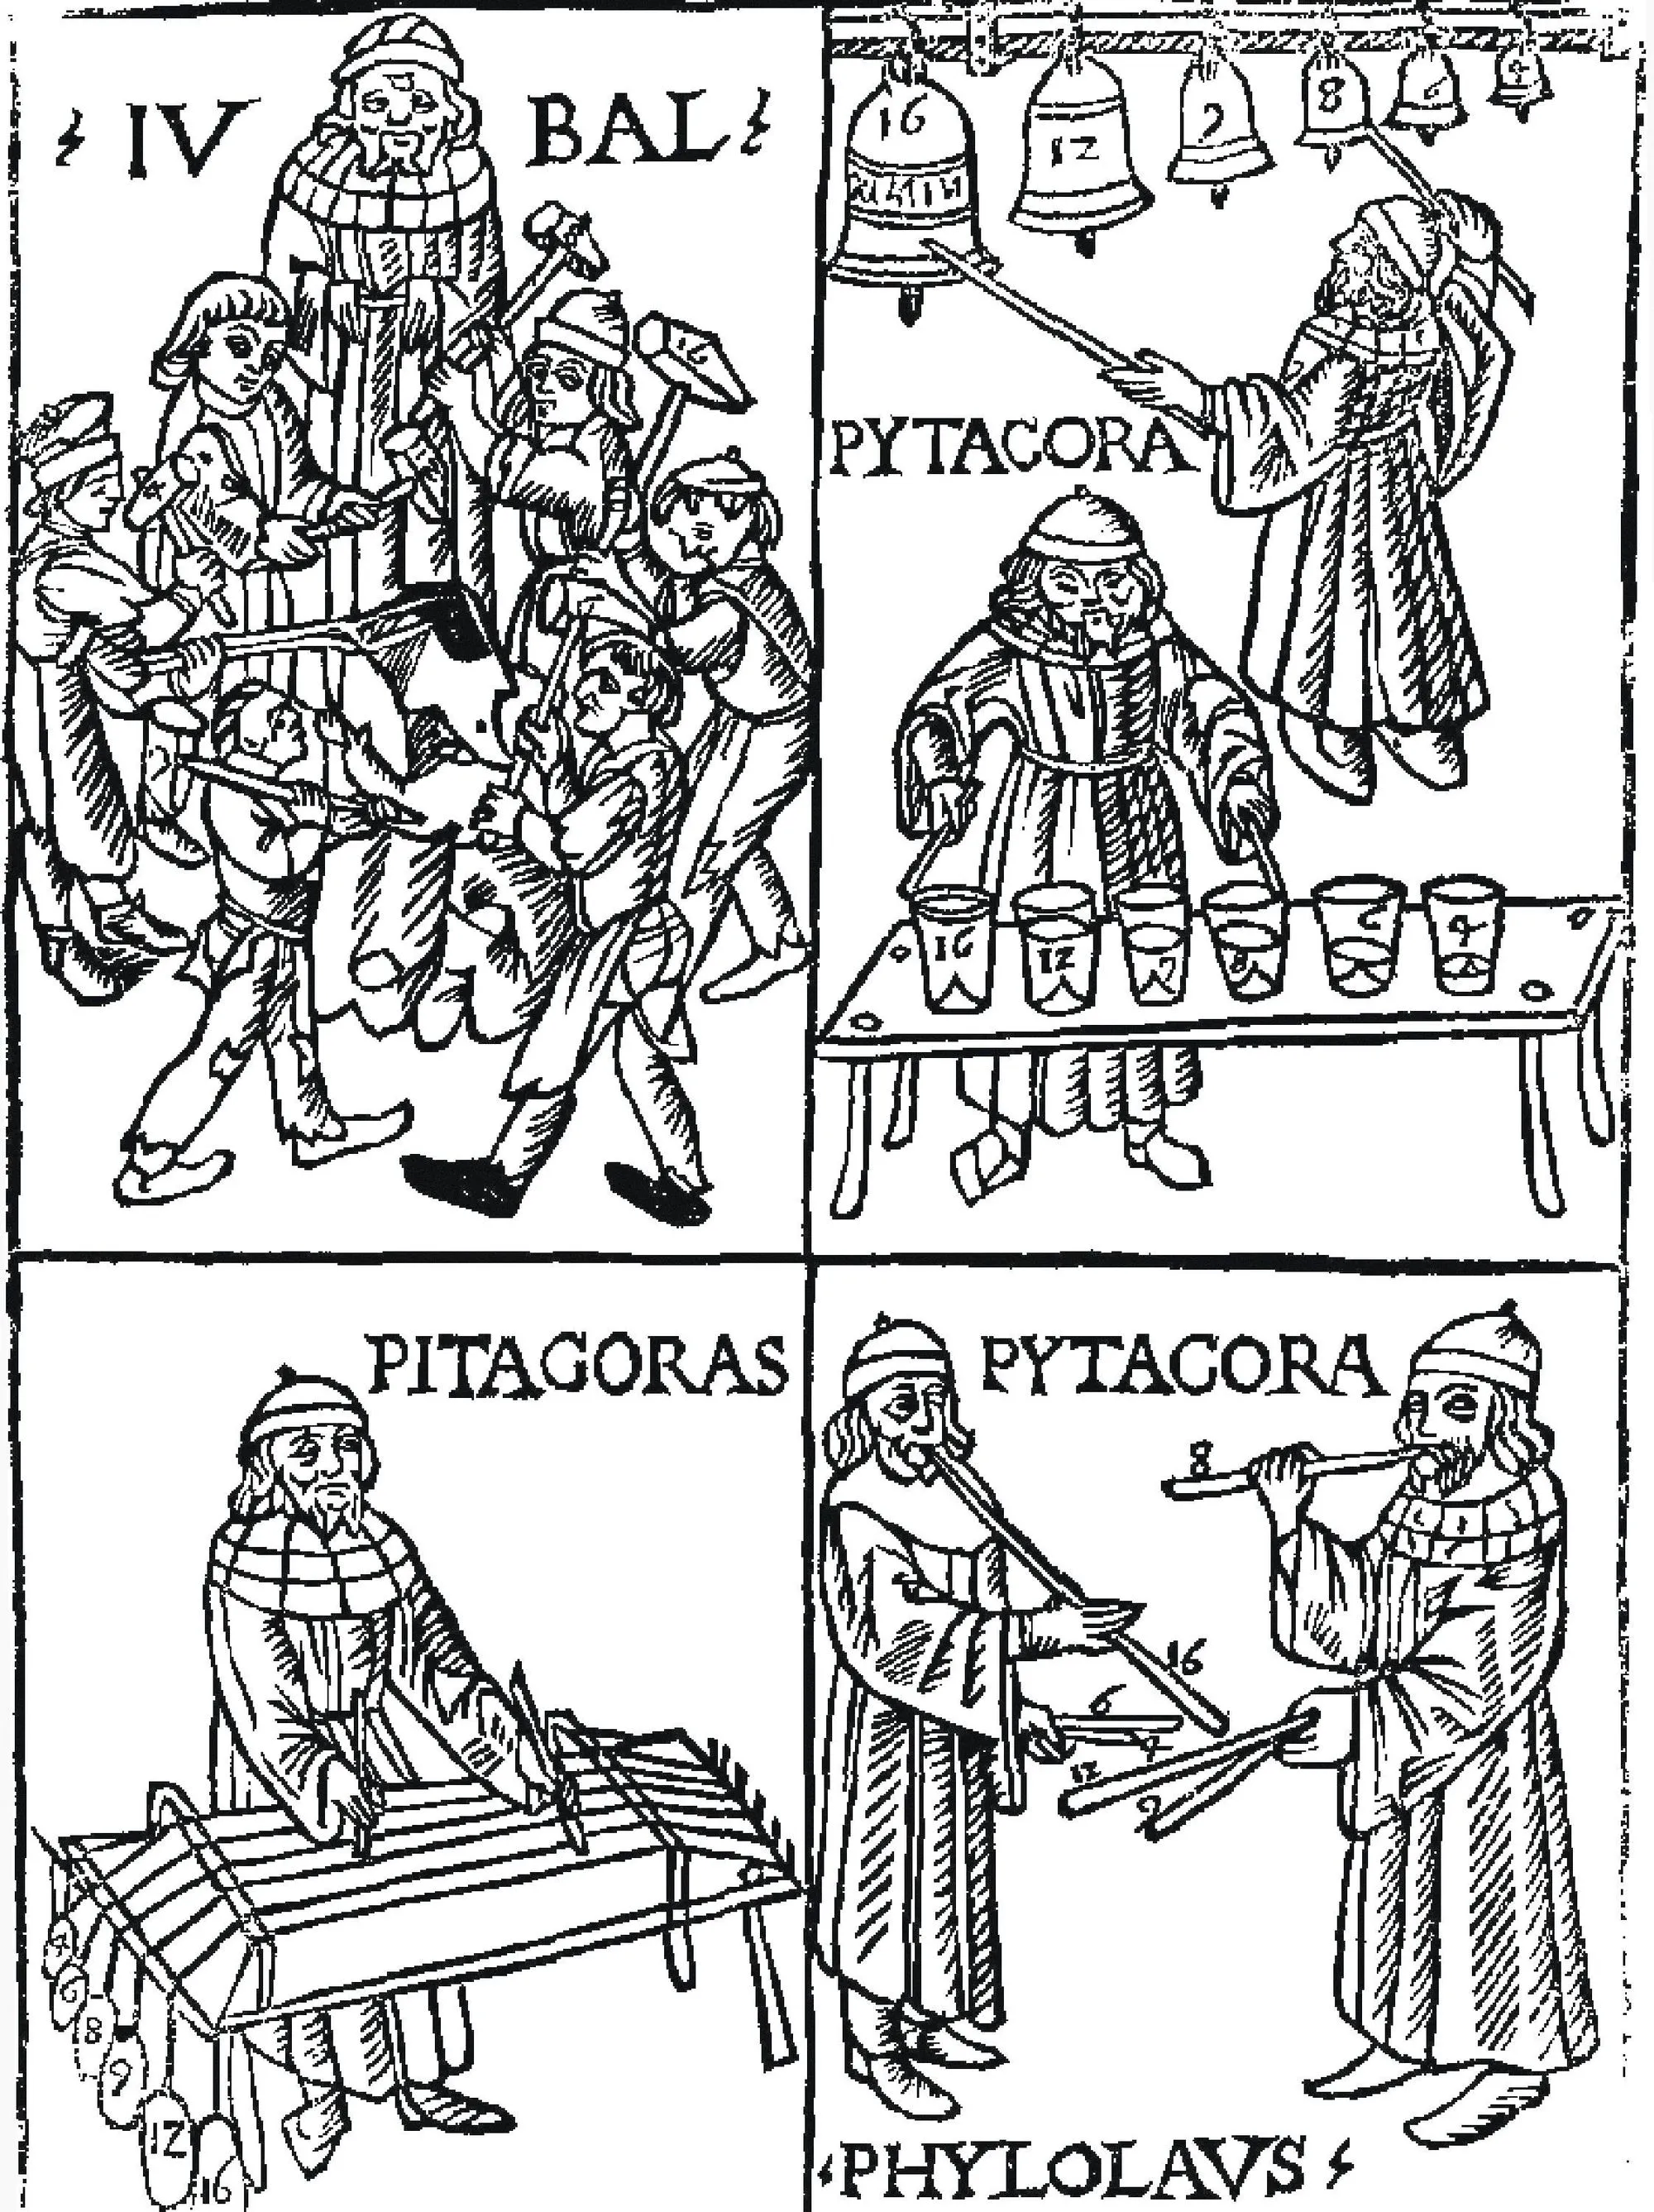 Pythagore à la recherche de l'harmonie
(F. Gaffurio, 1492).